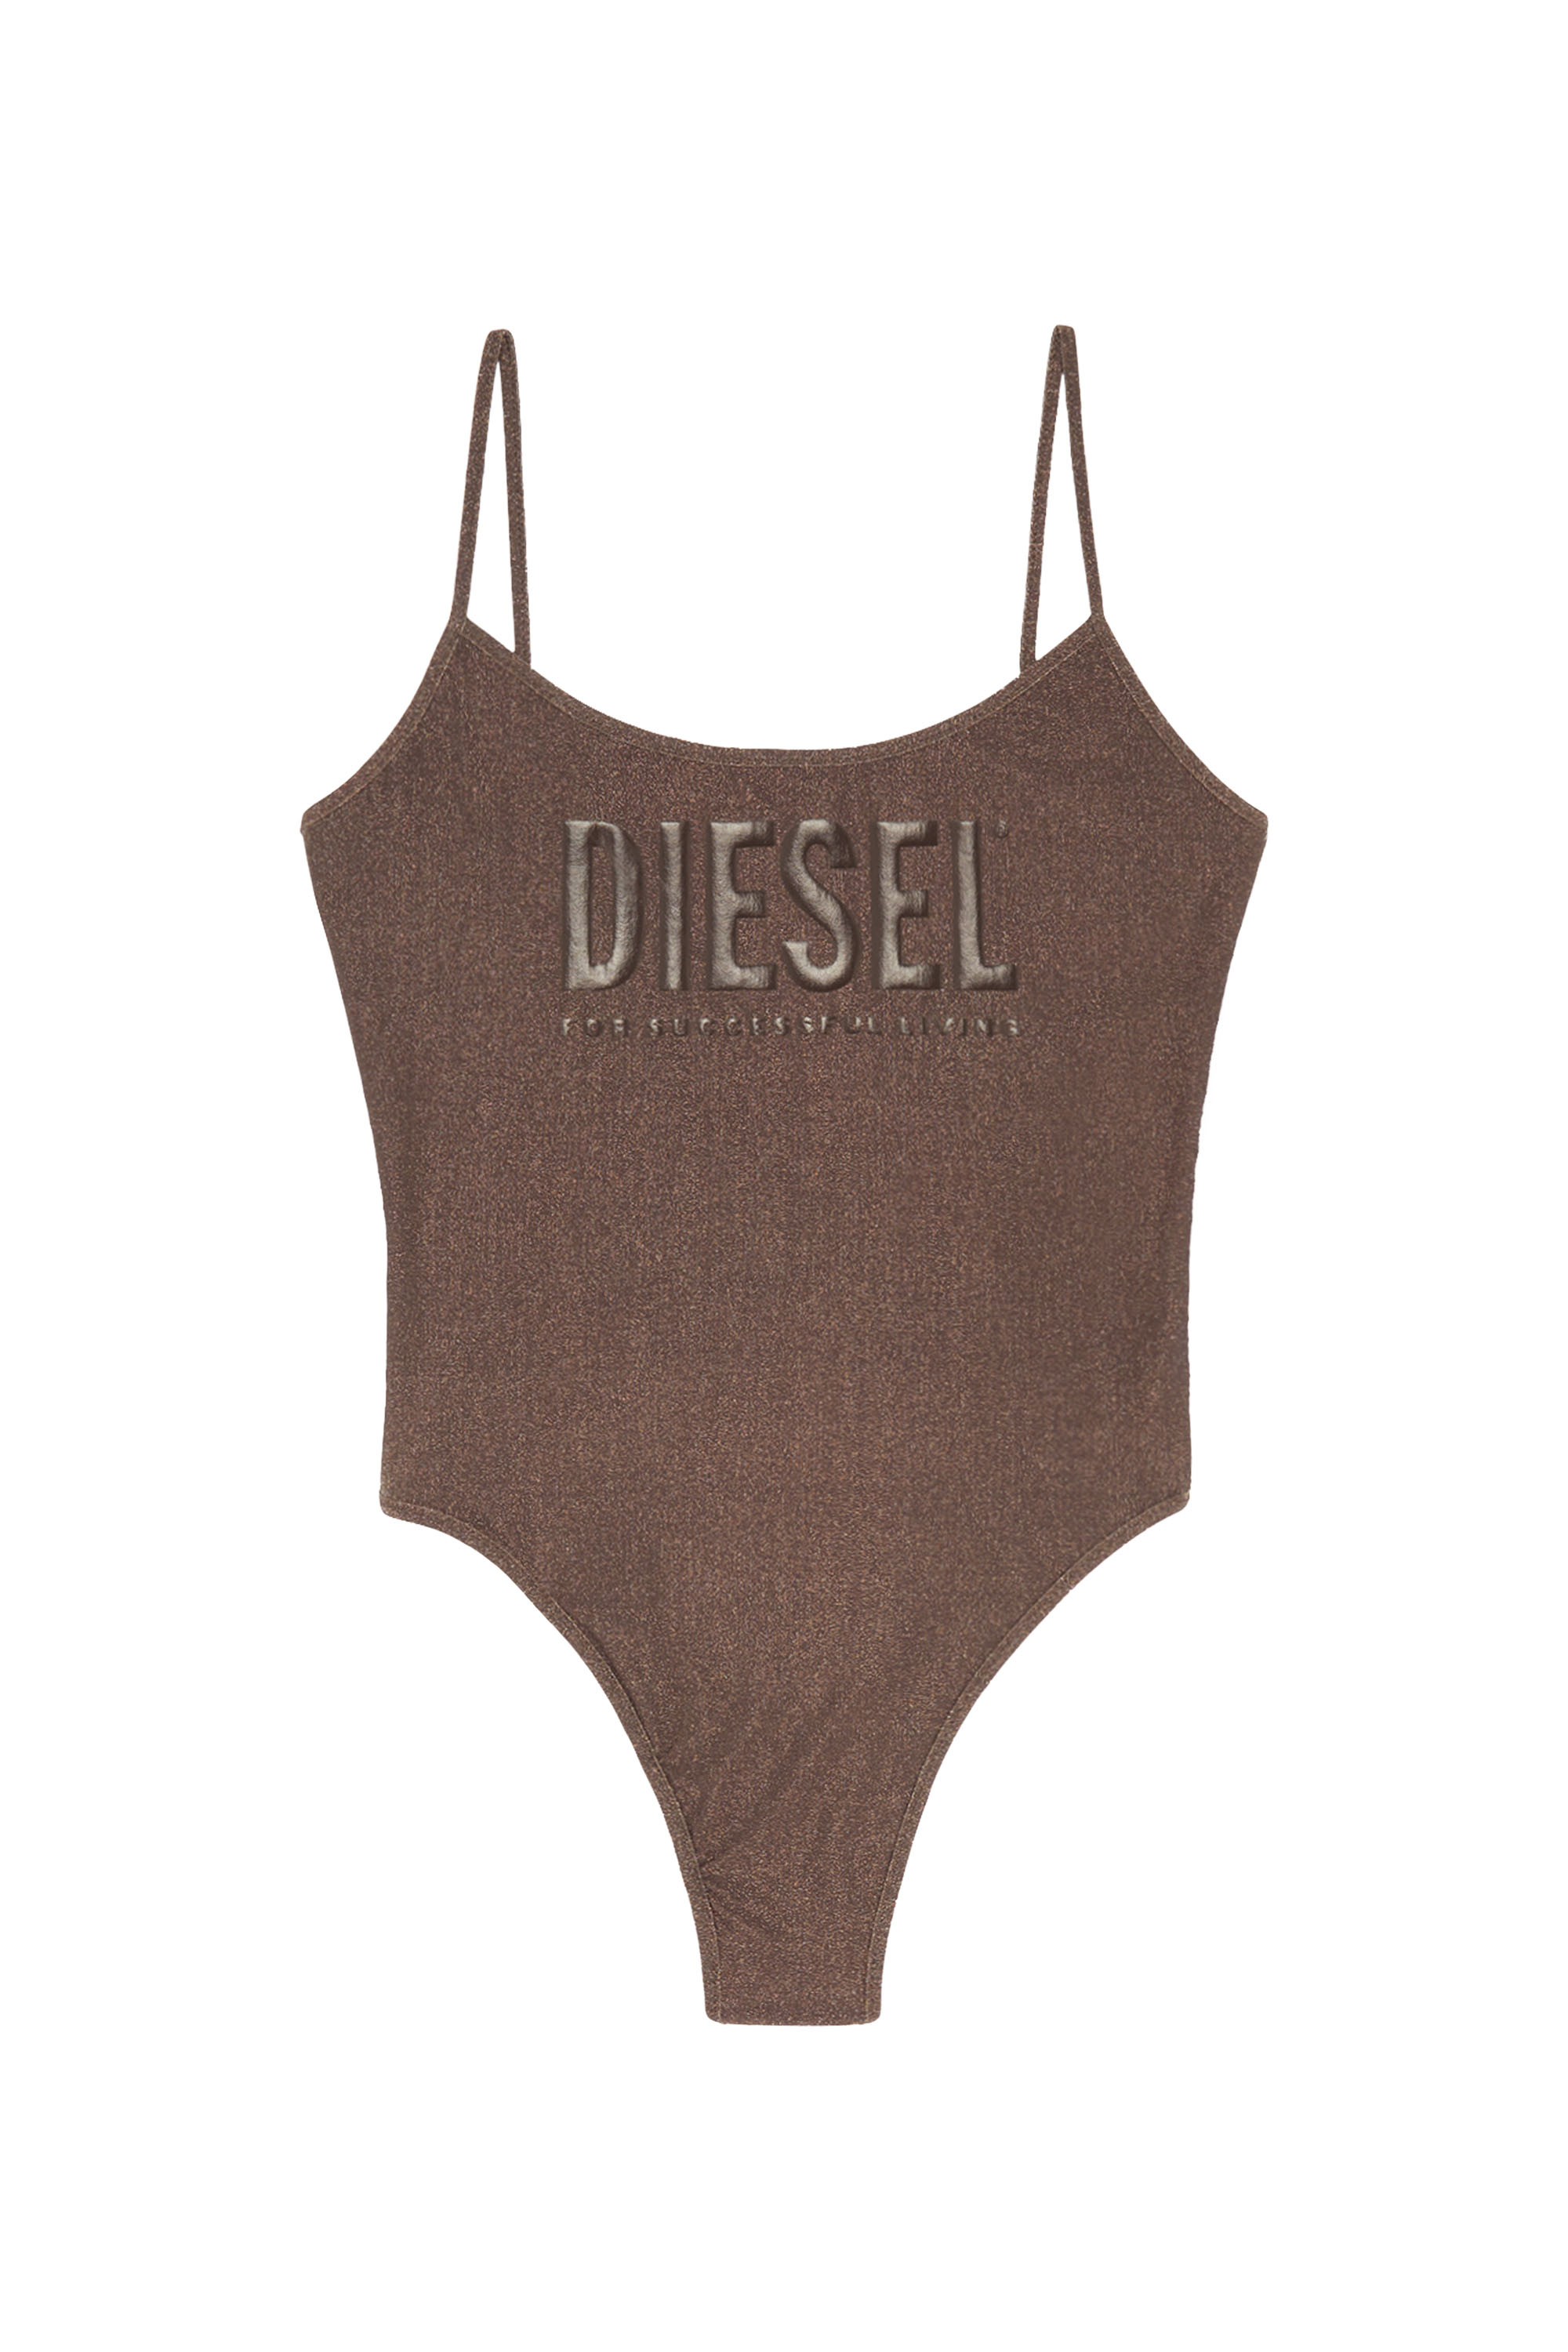 Diesel - BFSW-GRETEL, Brown - Image 1